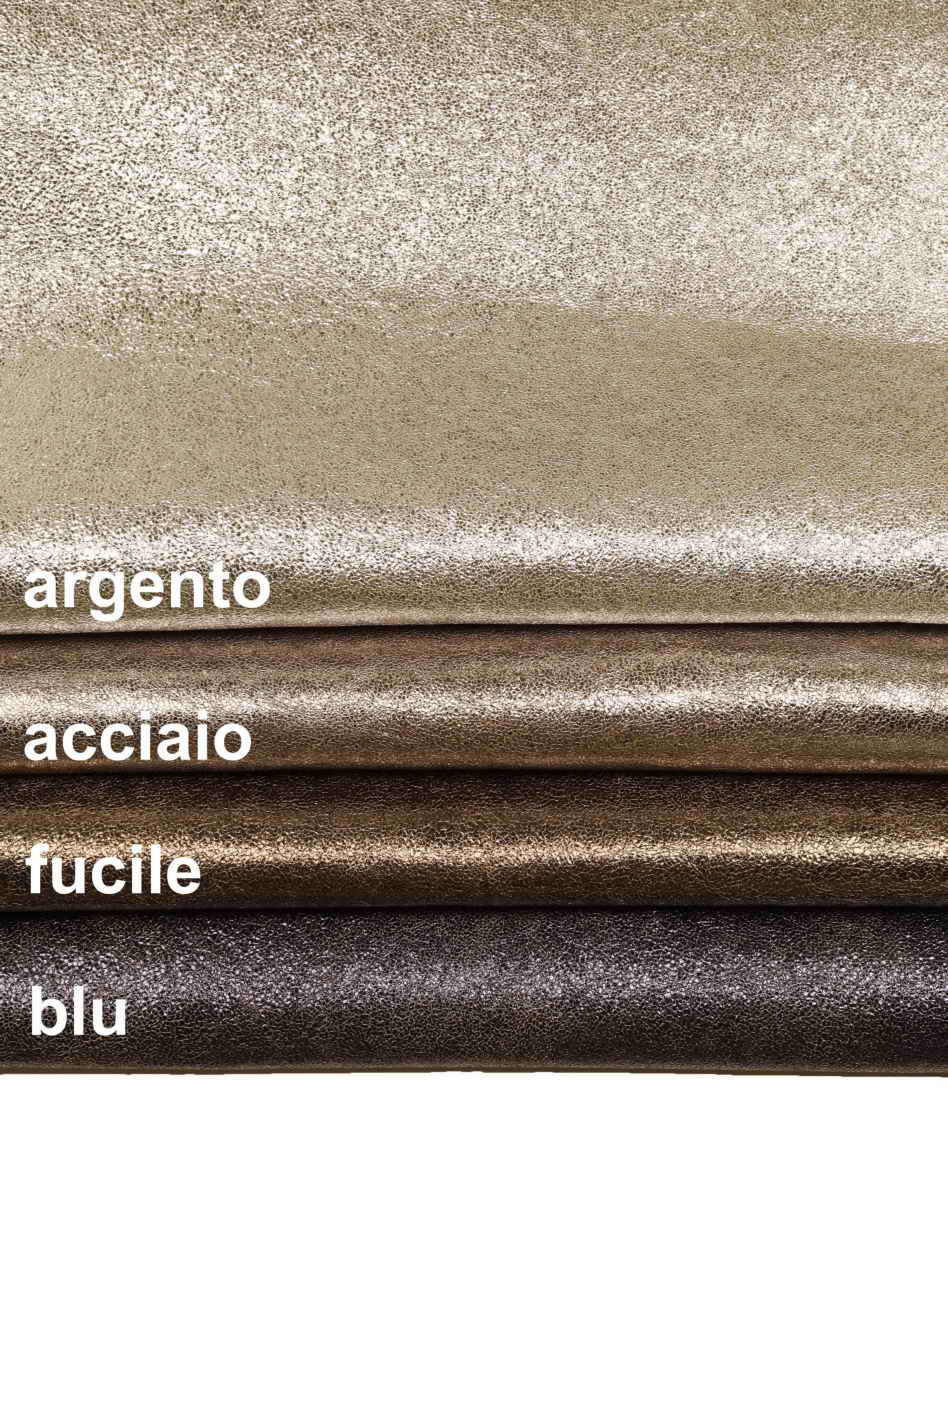 https://www.lagarzarara.com/41892-thickbox_default/silver-blue-gunmteal-steel-leather-hide-metalliz-tiny-pebble-grain-goatskin-soft-skin-with-foil.jpg